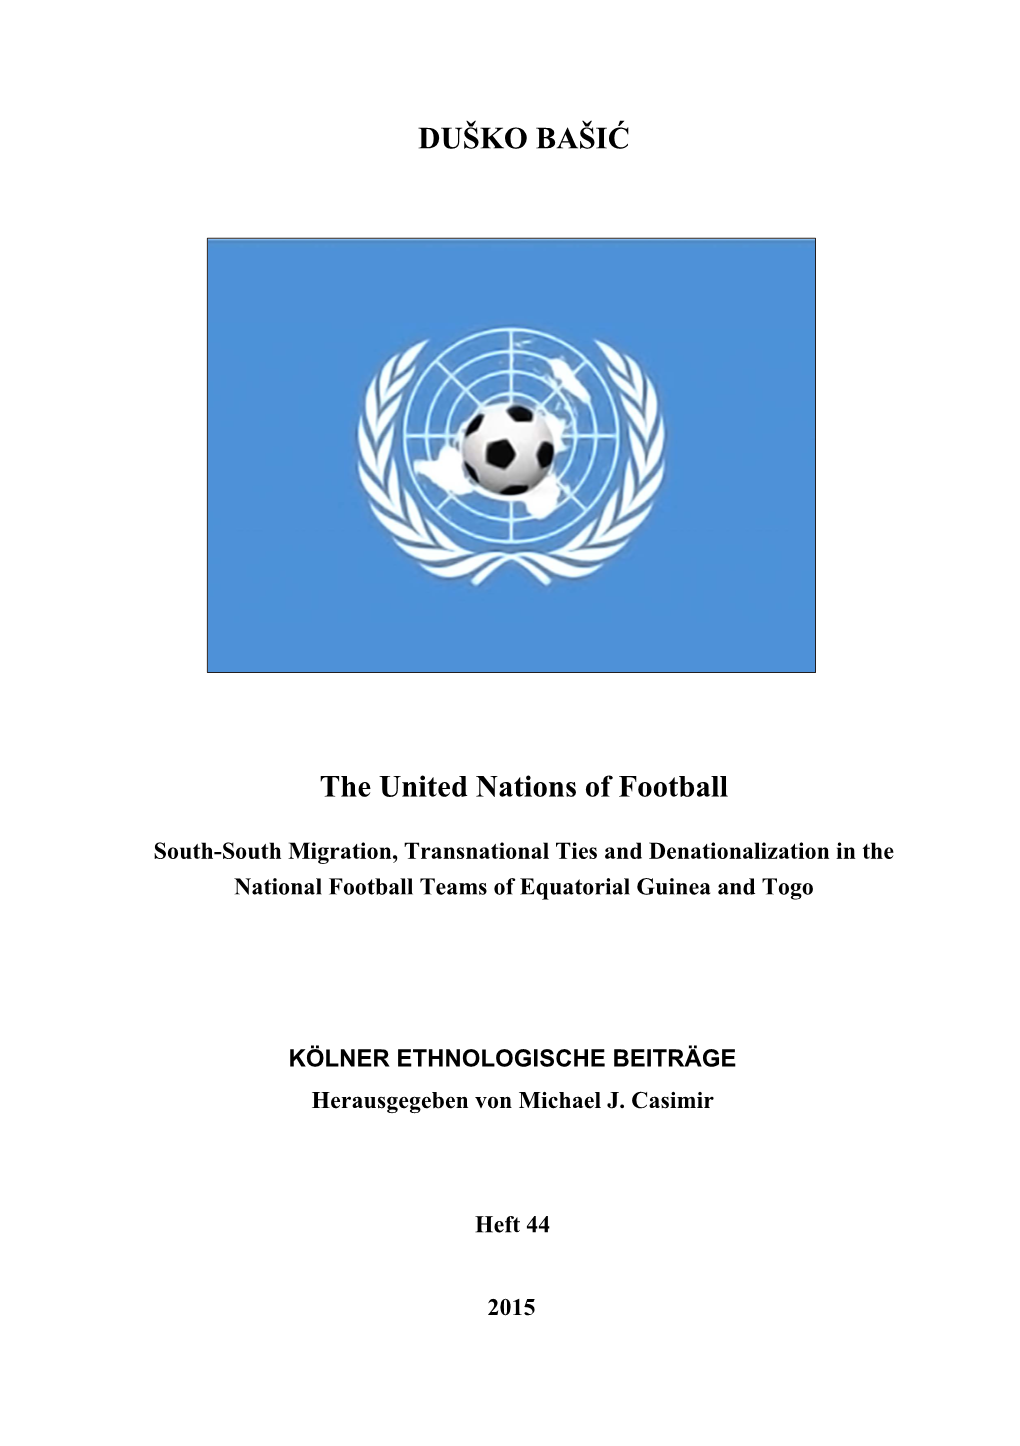 DUŠKO BAŠIĆ the United Nations of Football